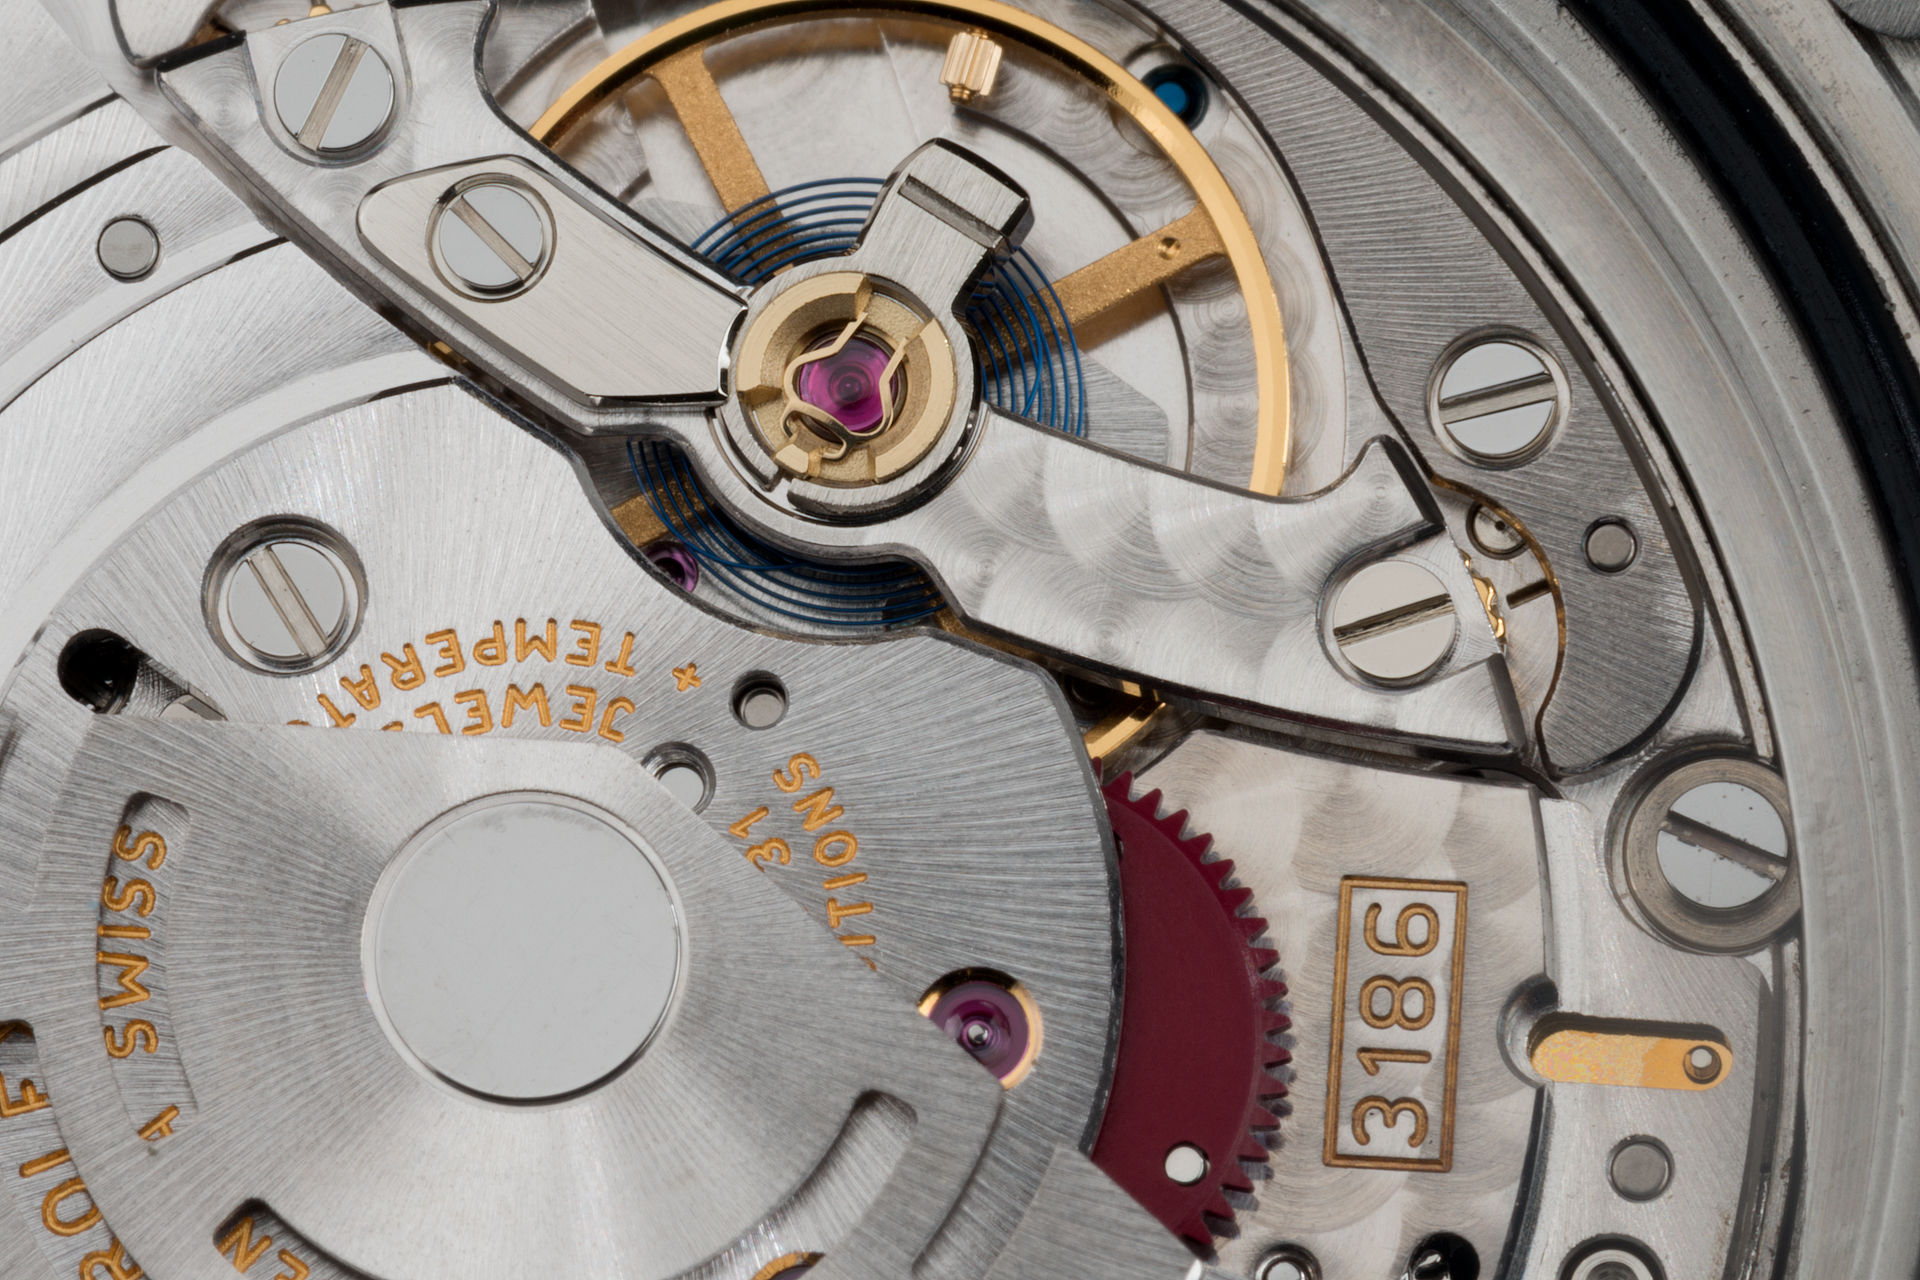 ref 16710BLRO | Rare Final Series | Rolex GMT-Master II